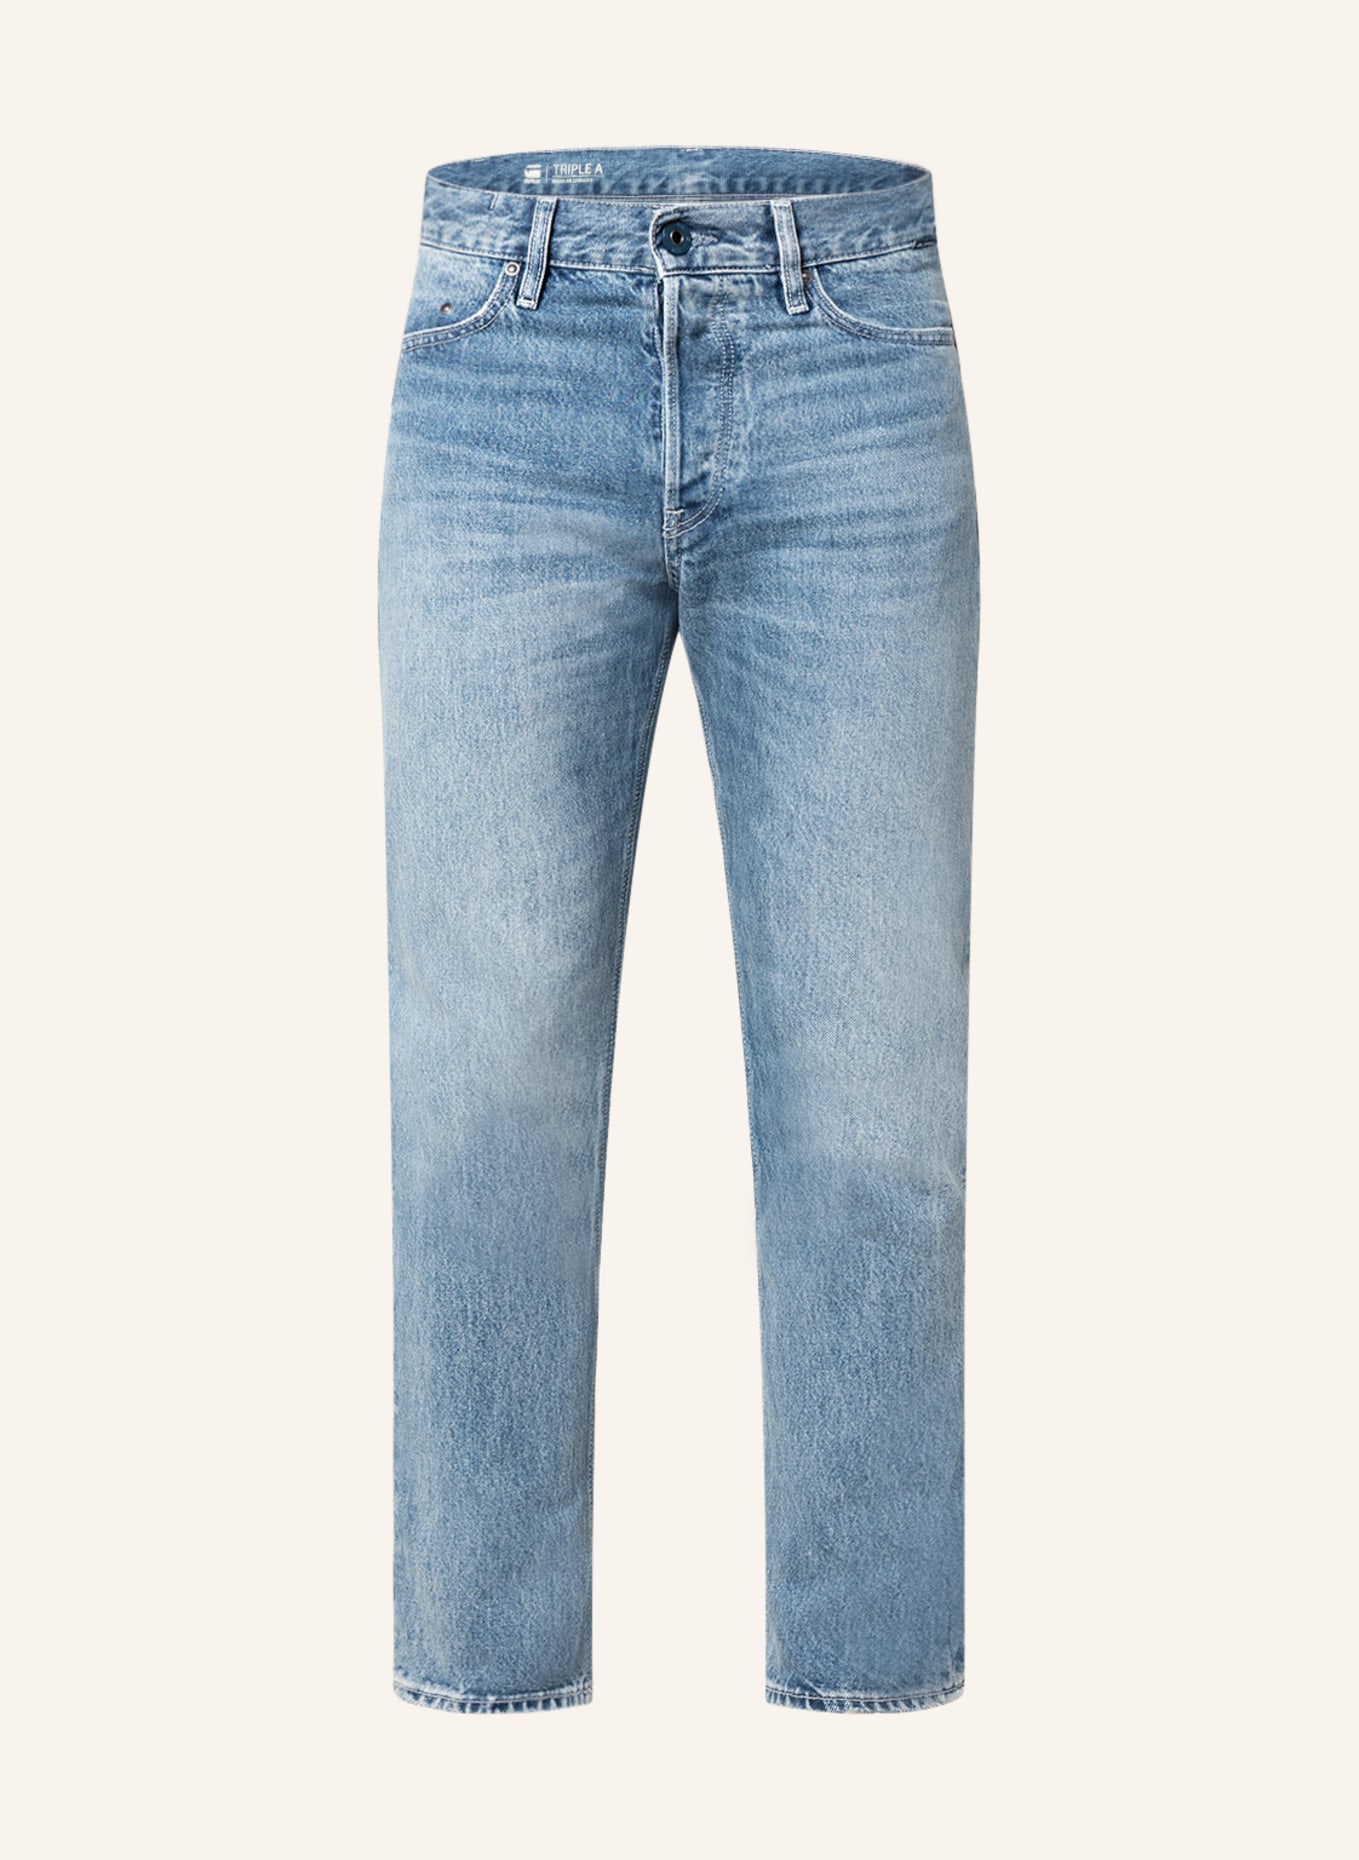 G-Star RAW Jeans Straight Regular Fit , Farbe: C947 sun faded air force blue (Bild 1)